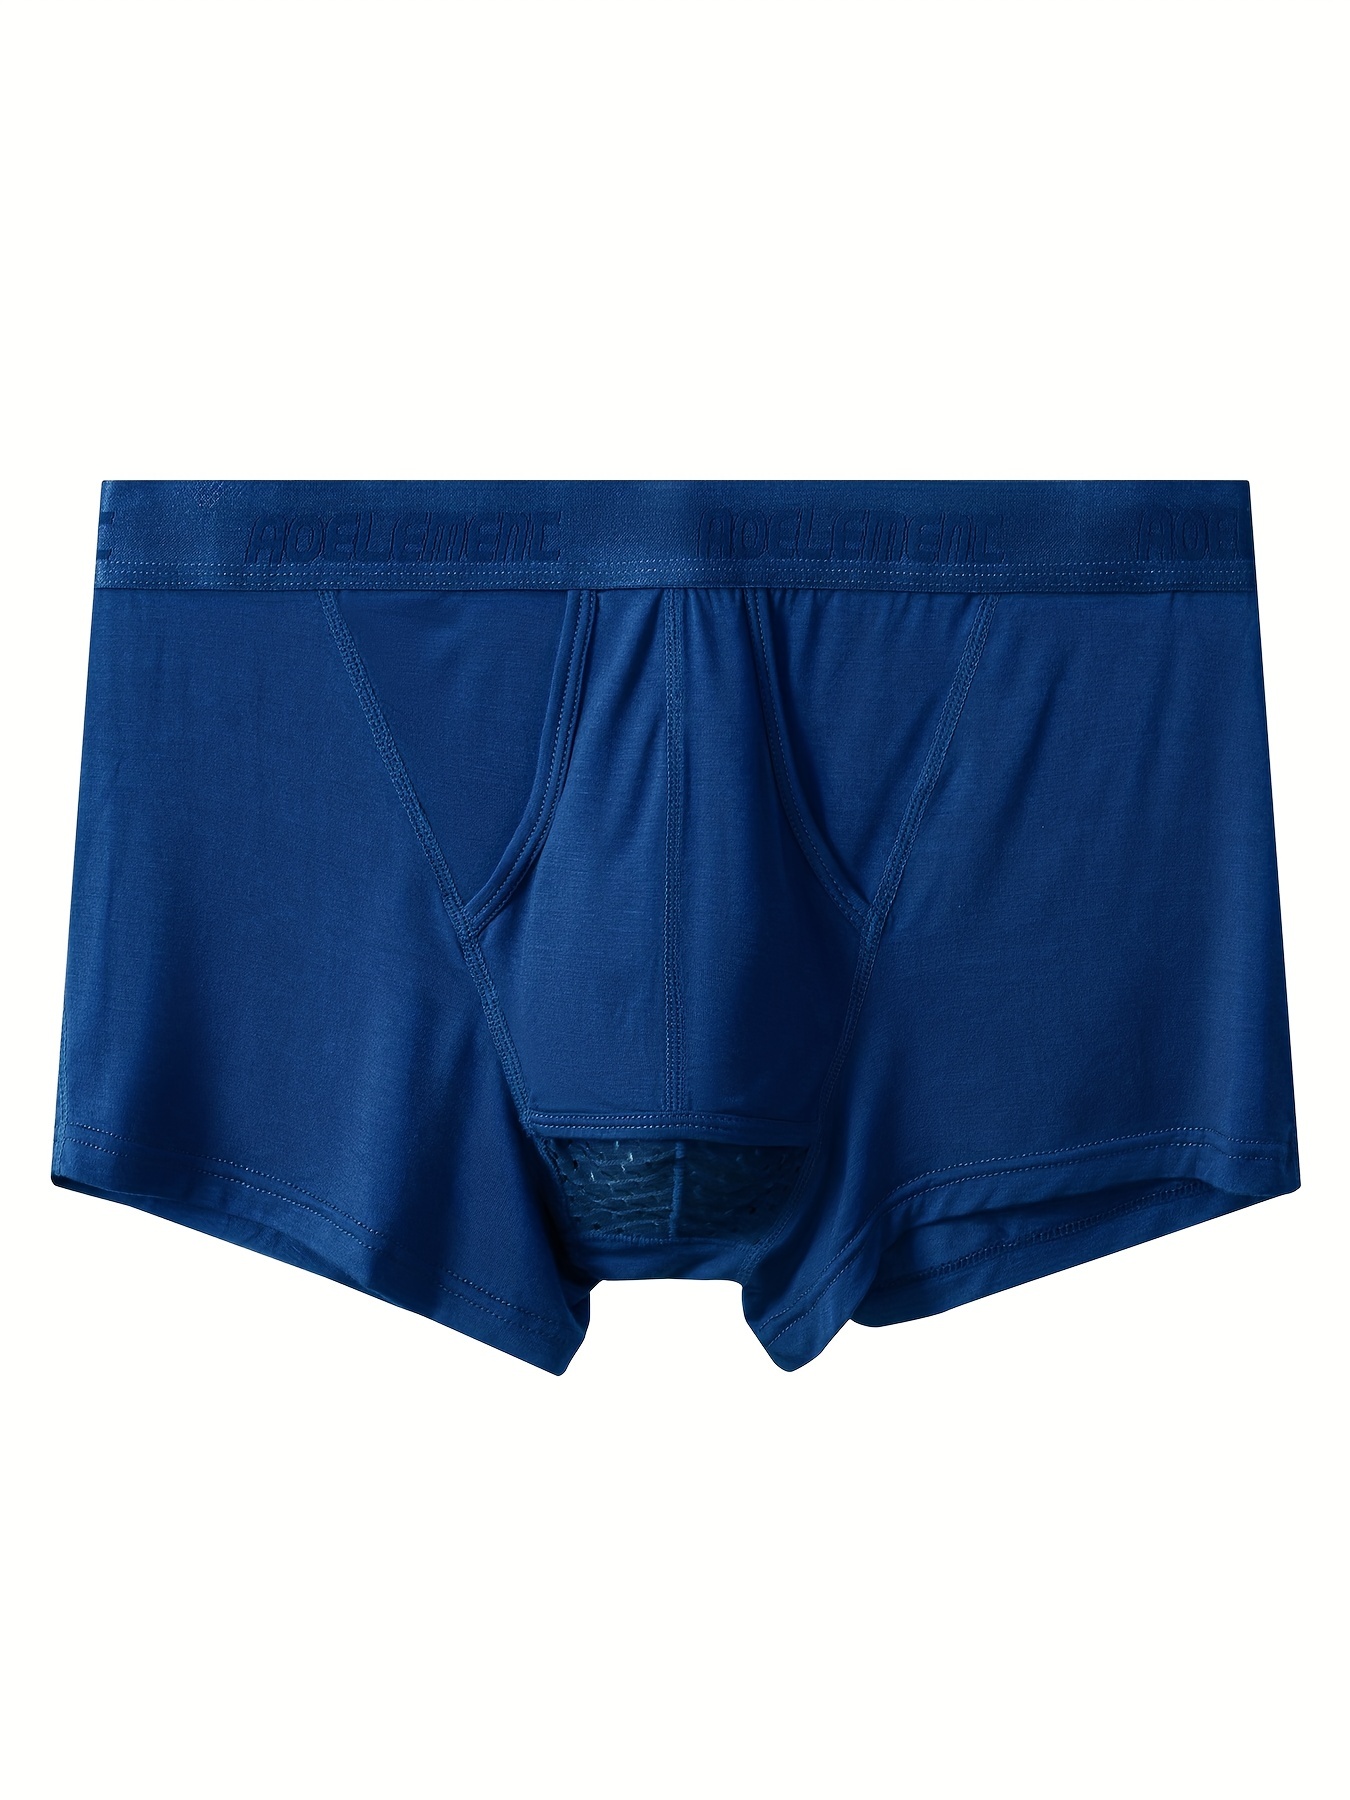 Mens Summer Comfortable Sheer Mesh Bulge Pouch Boxer Briefs Shorts Underwear